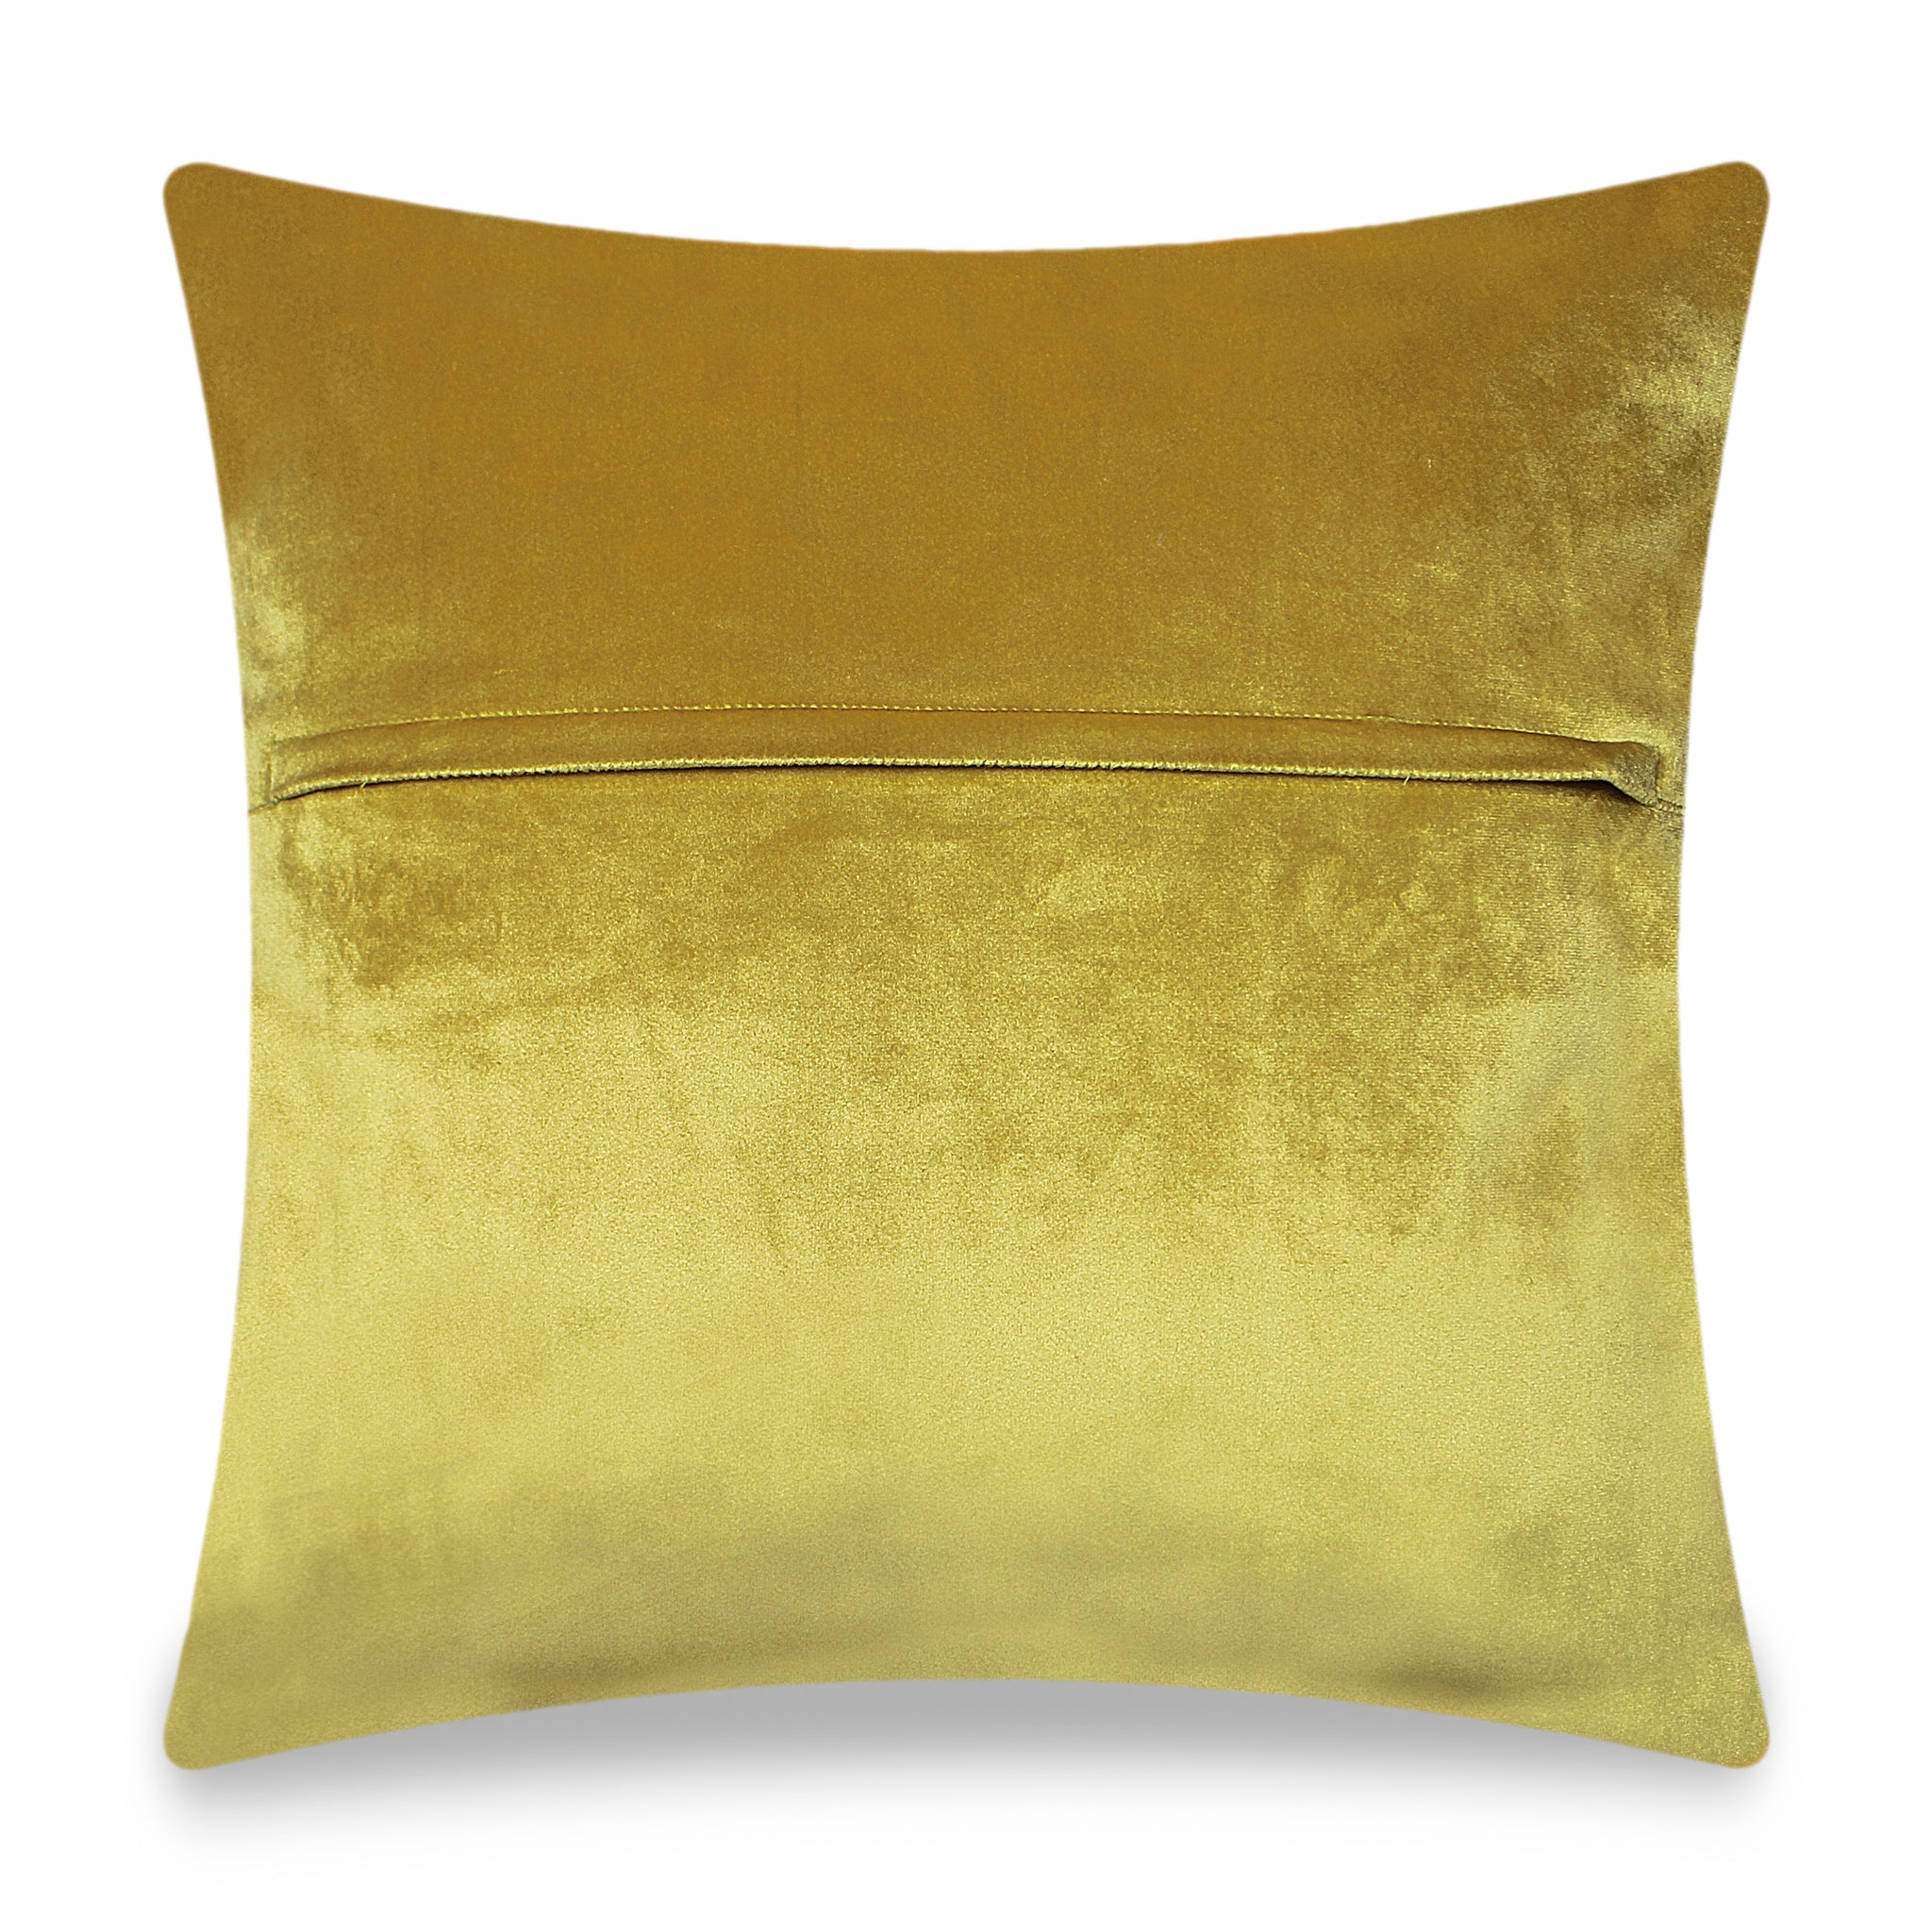 en Velvet Cushion Cover Baroque Frame and Jungle Decorative Pillowcase Classic Home Decor Throw Pillow for Sofa Chair 45x45 cm 